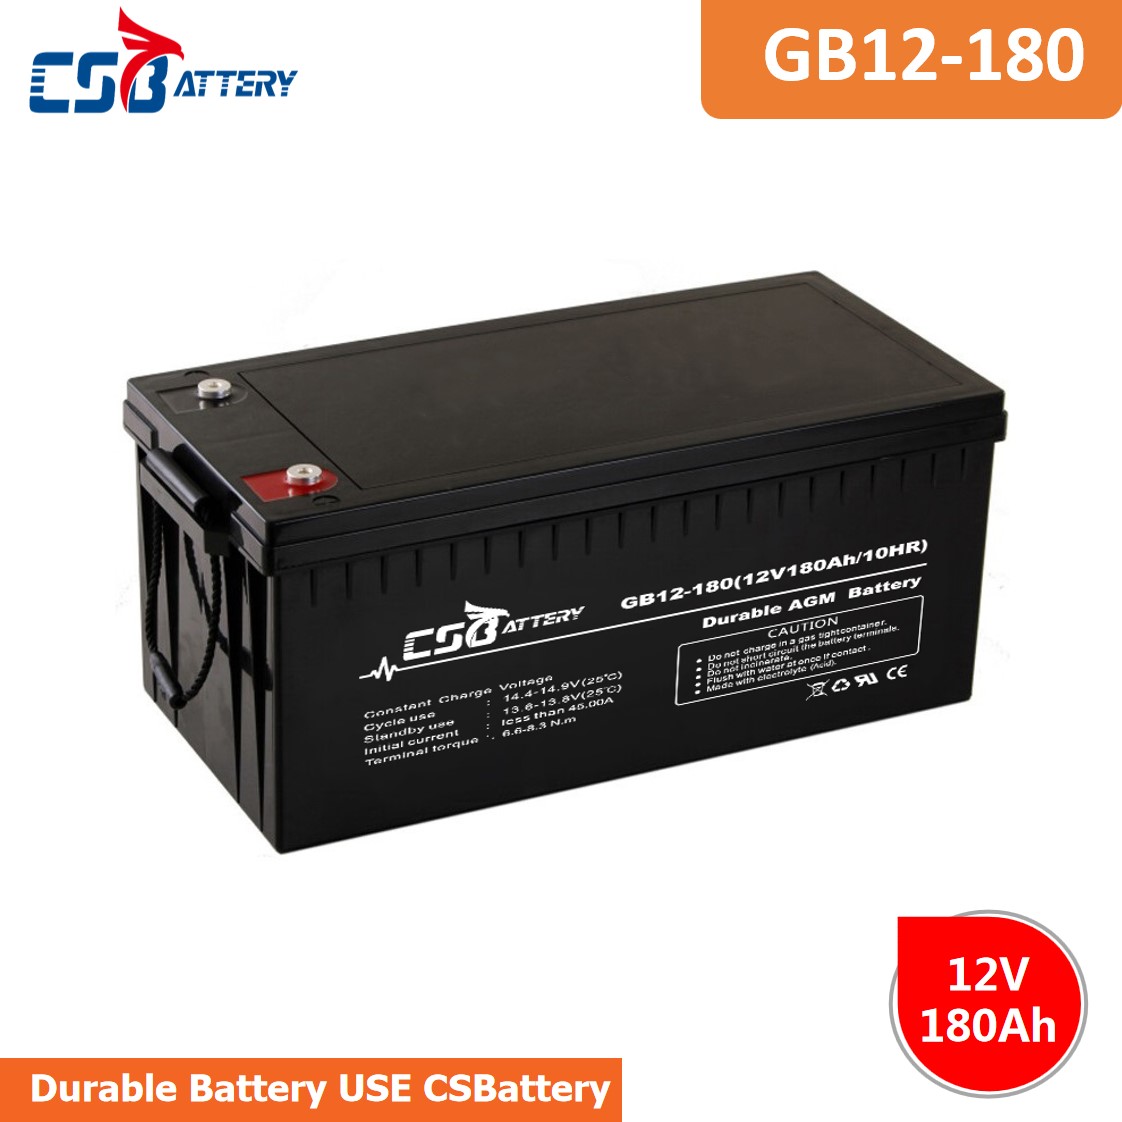 Csbattery 12V180ah 3years Warranty Durable Lead-Acid Battery for Solar/Machine/Excavators/Vs: Hoppecke/Fortune/Amy